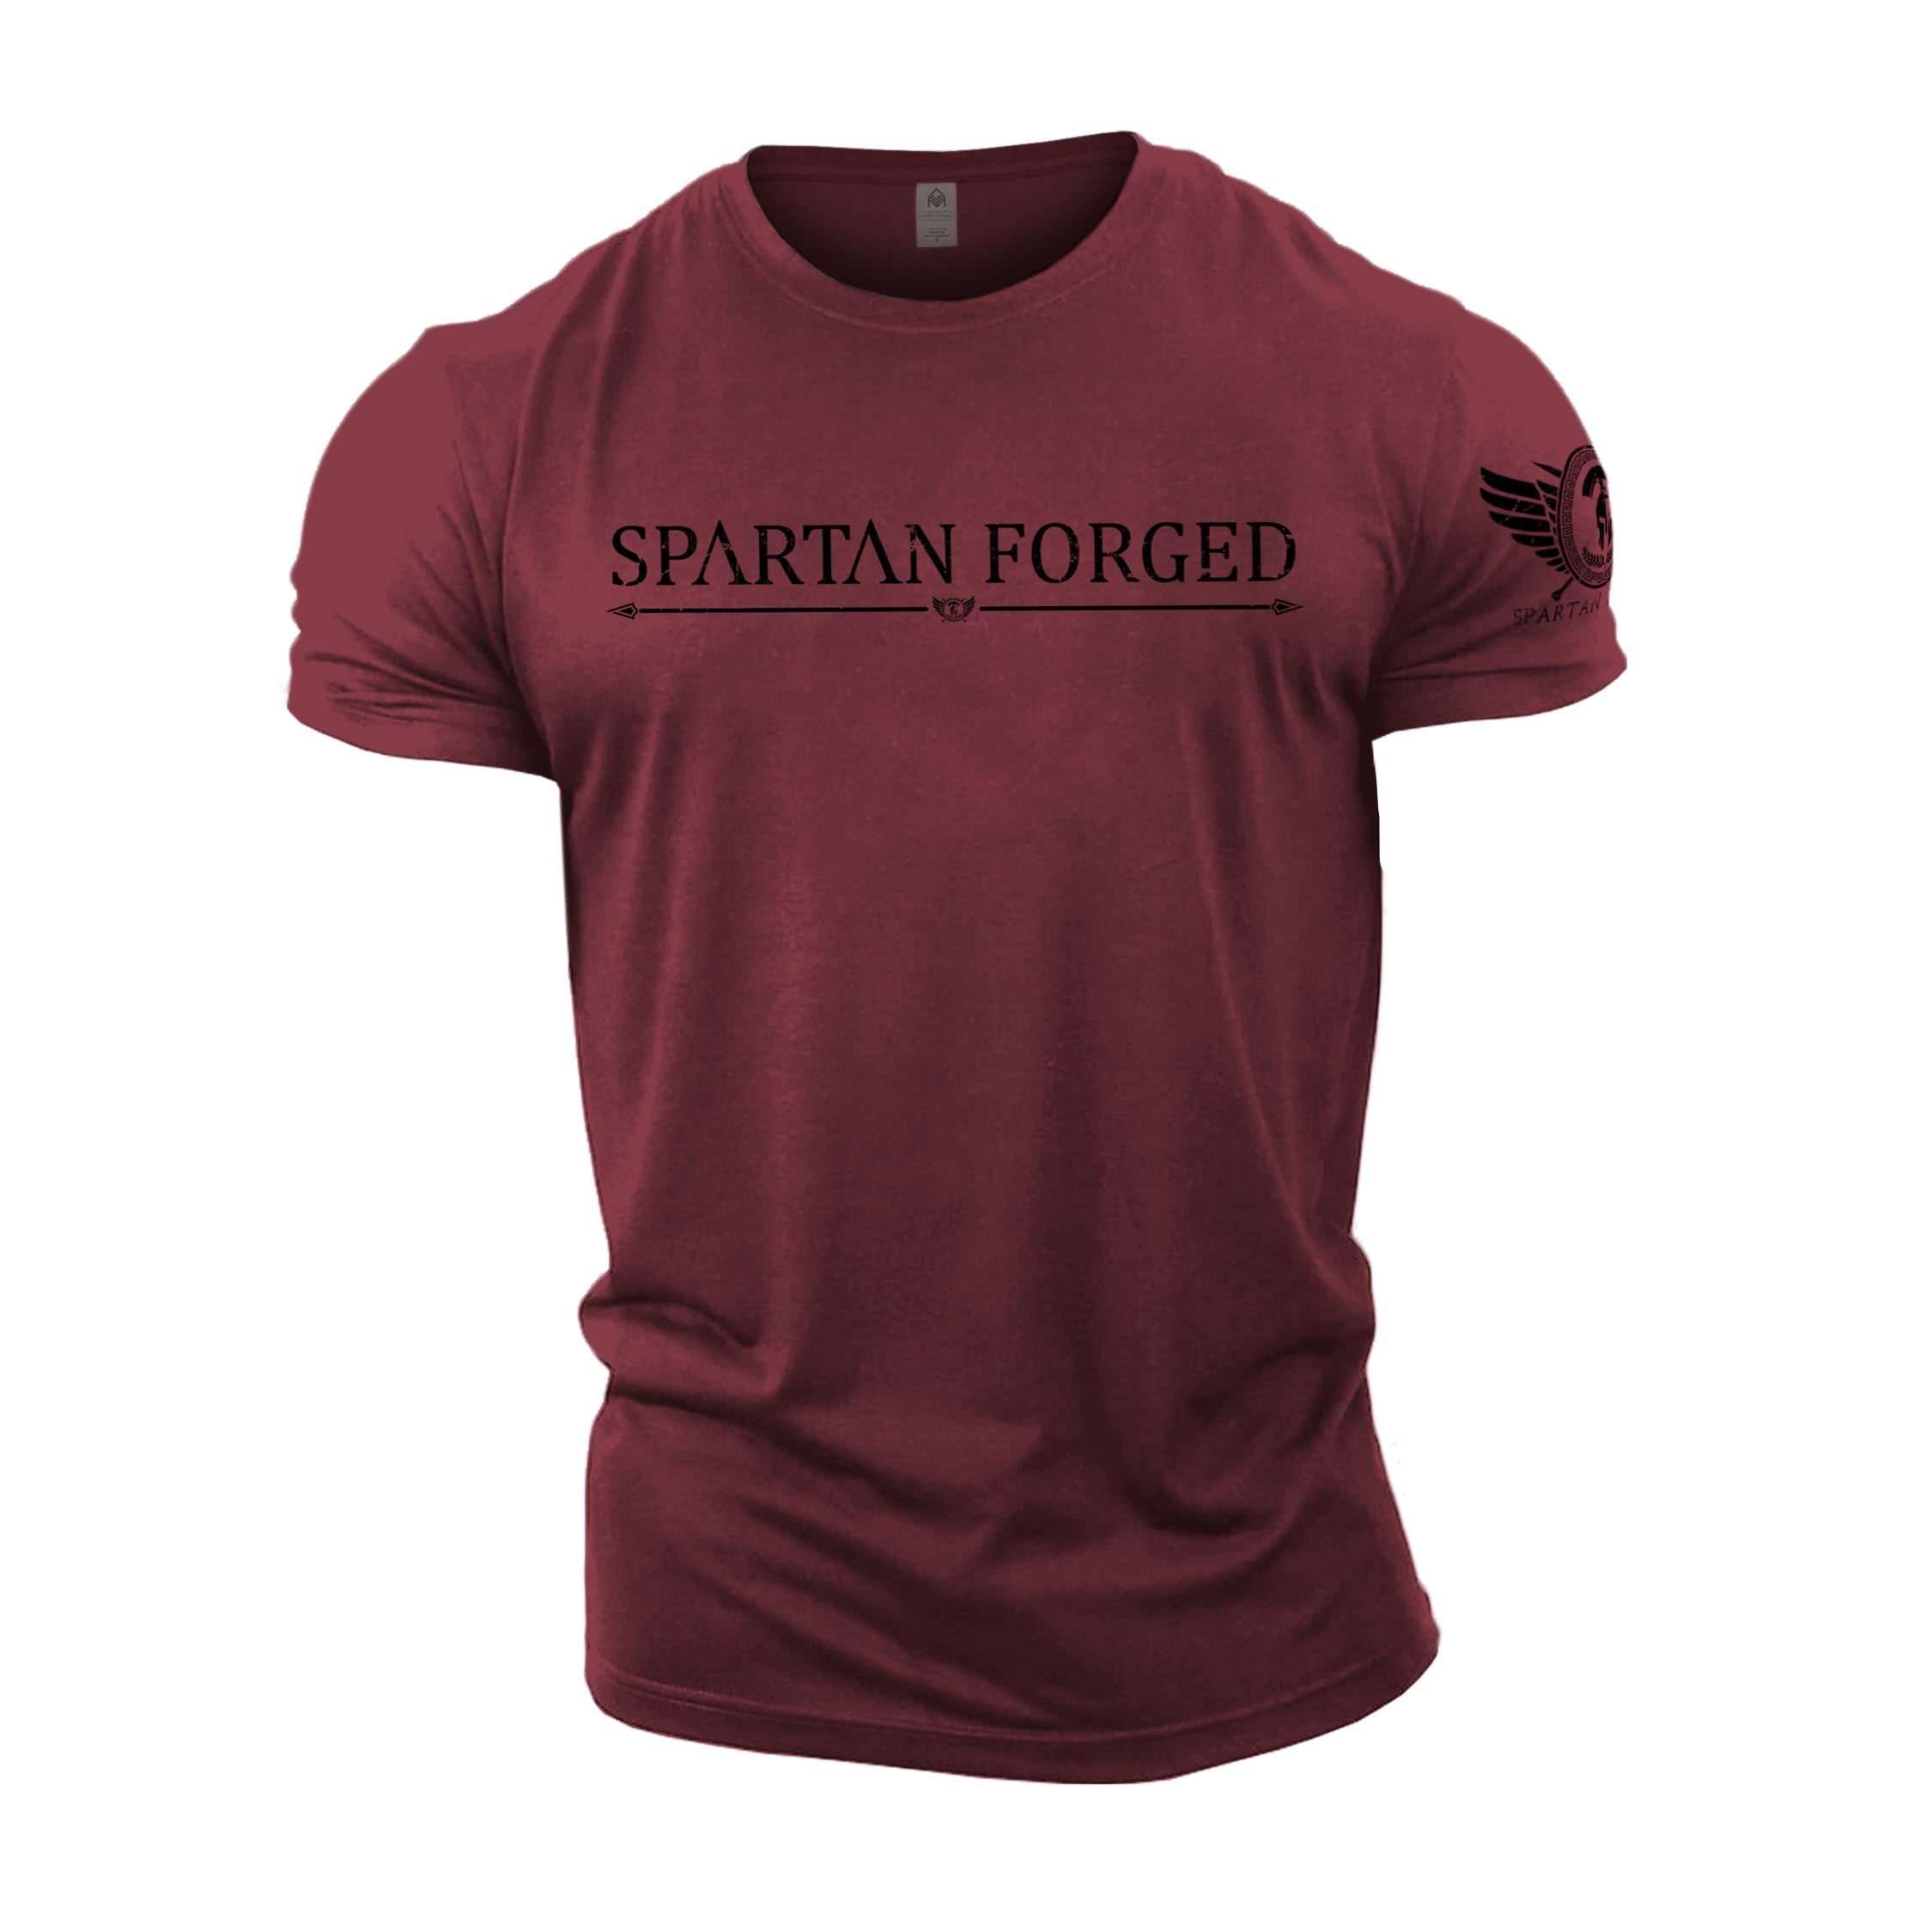 Spartan Forged - Spartan Forged - Gym T-Shirt